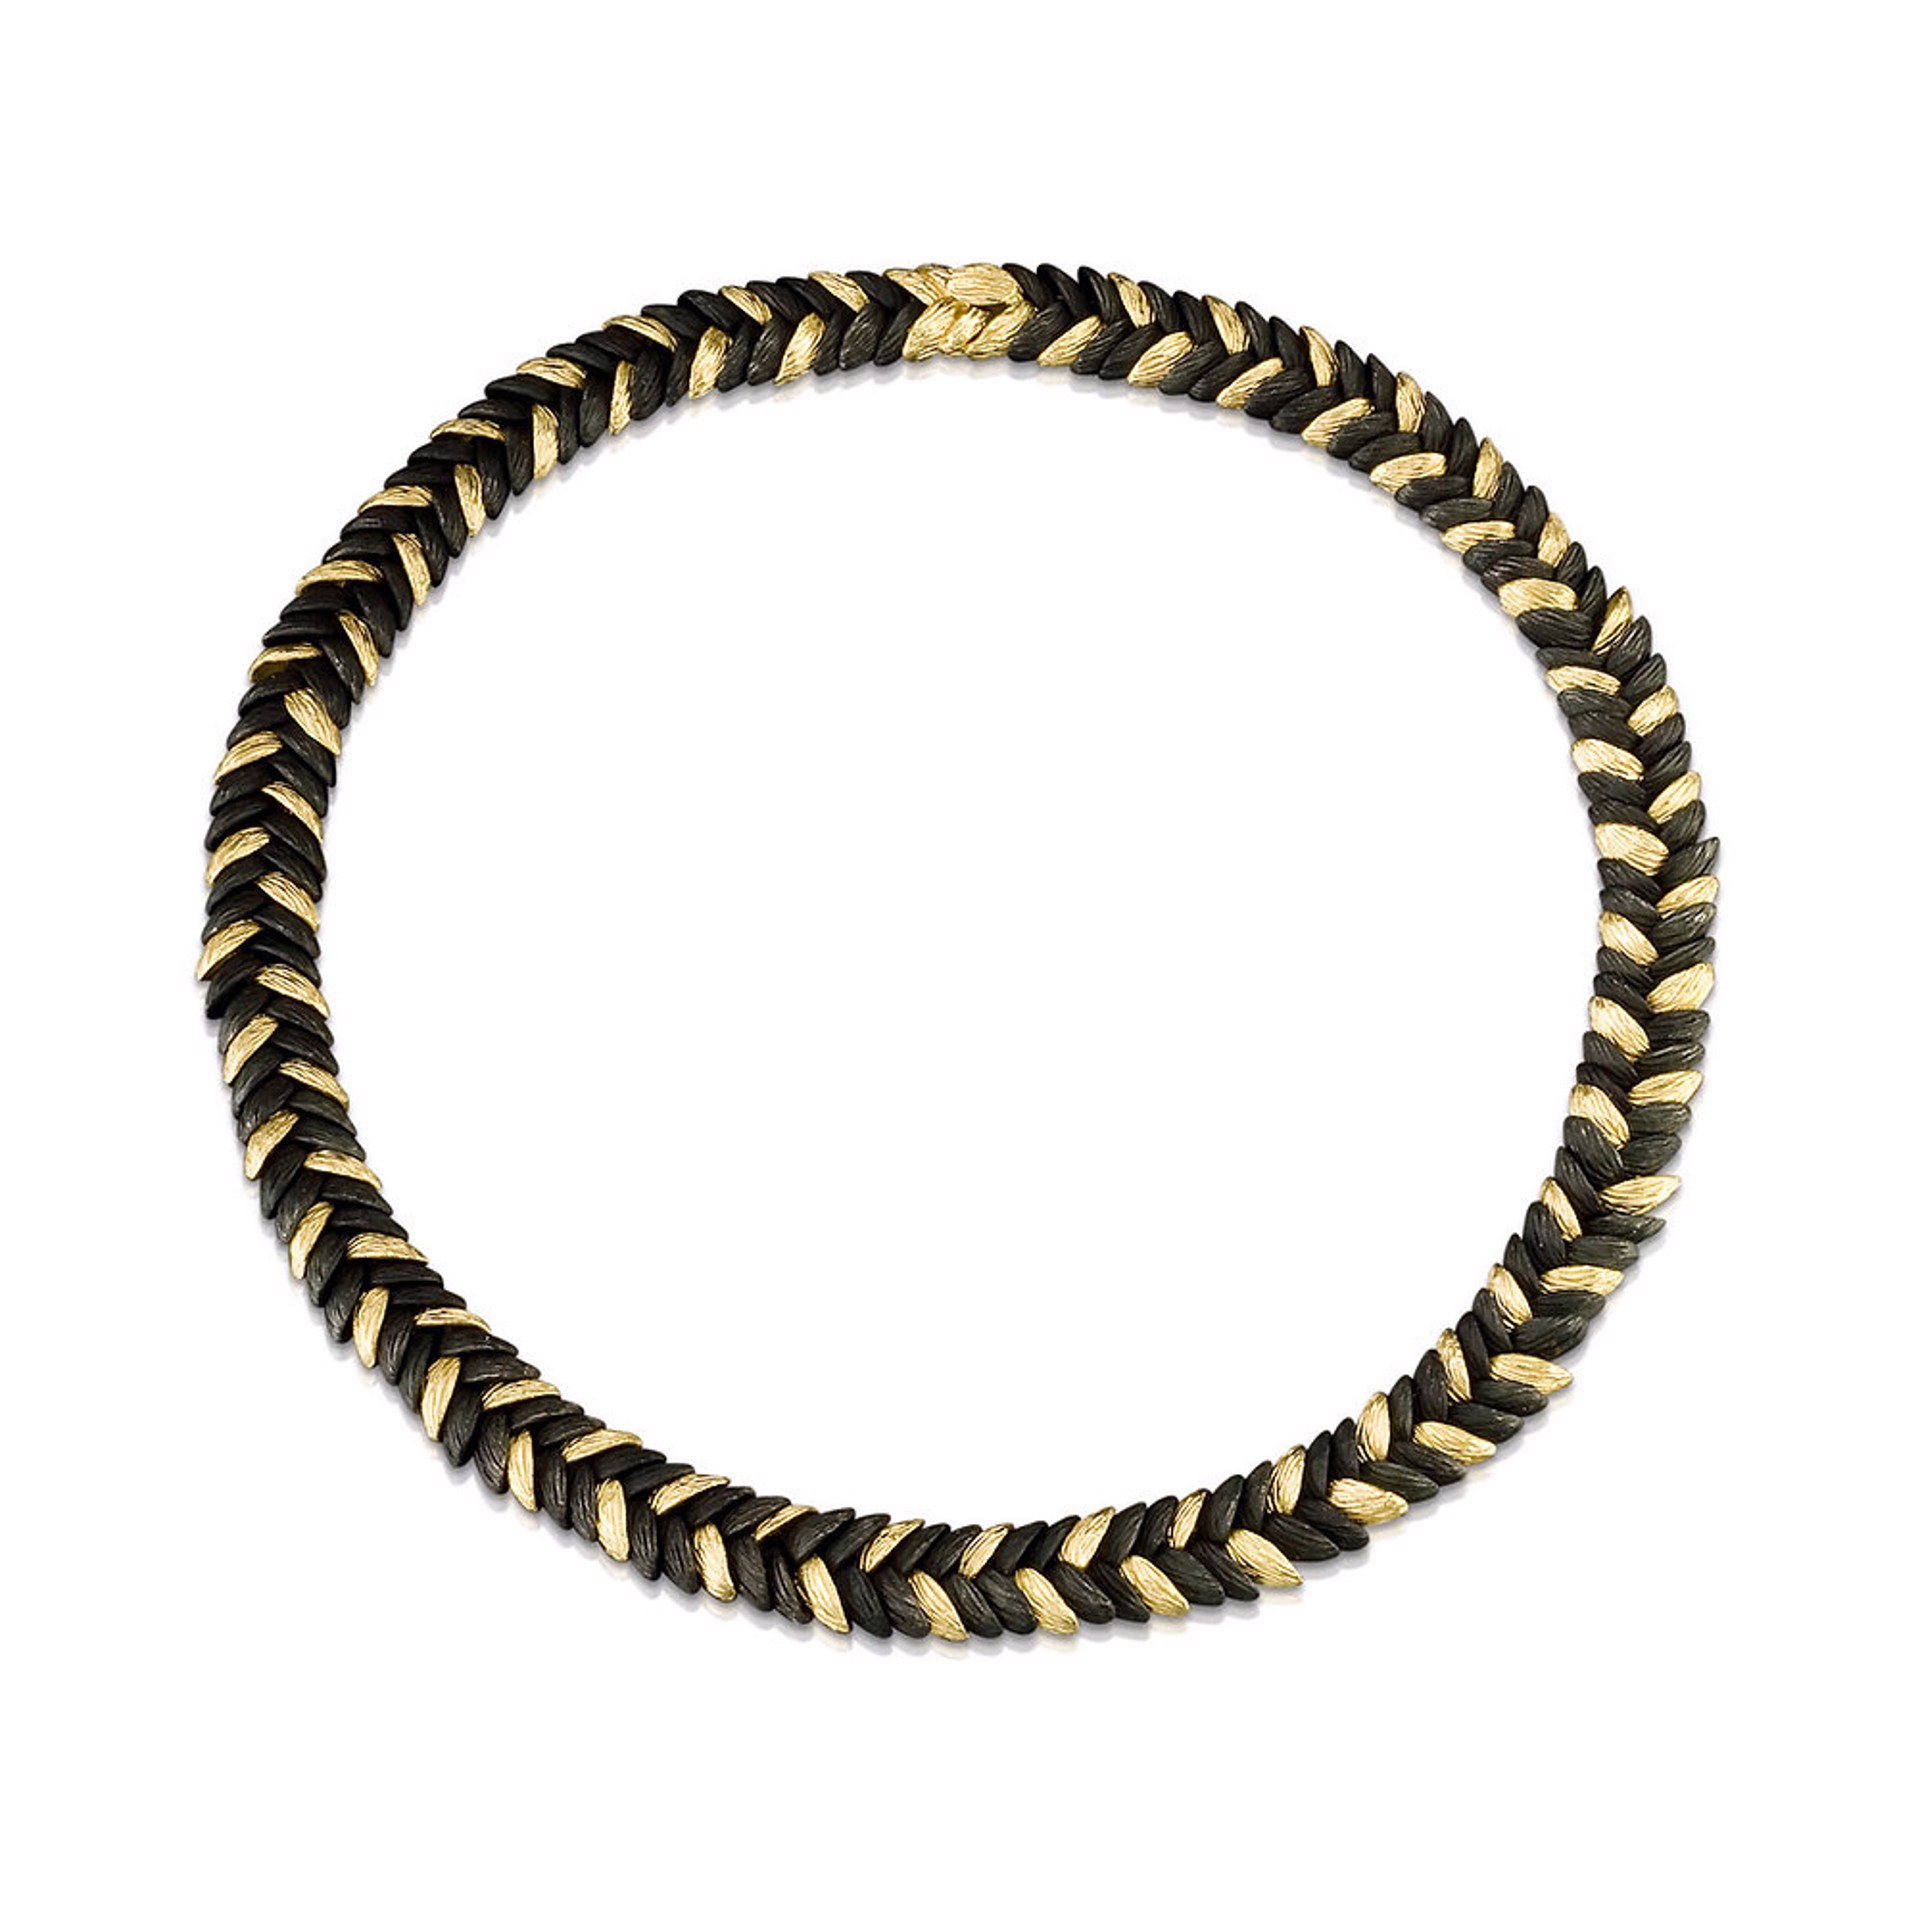 Rattlesnake Grass Necklace by SARAH GRAHAM